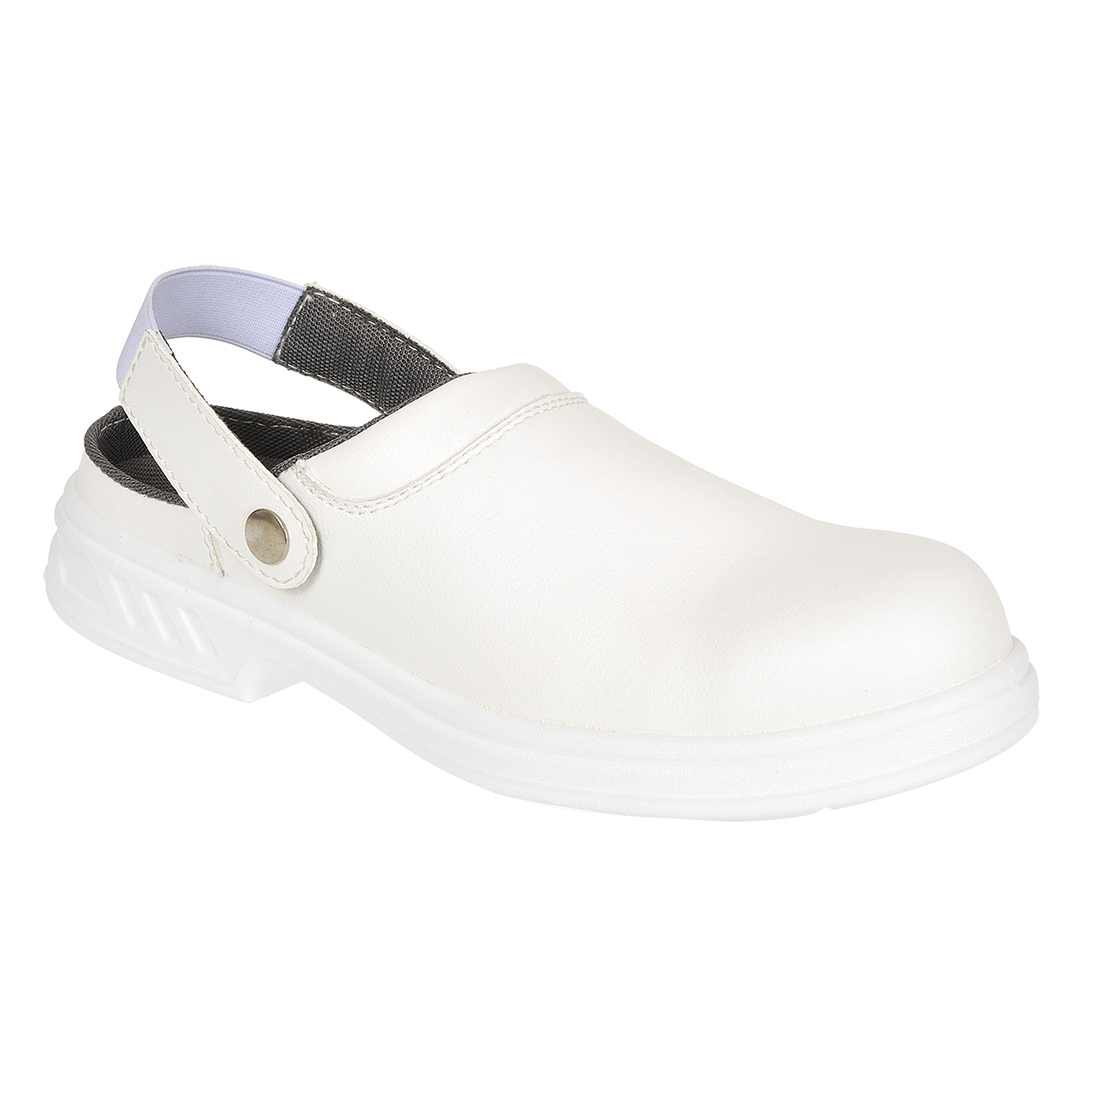 Pracovní sandál Steelite Safety Clog SB AE WRU Barva: bílá, Velikost: 39